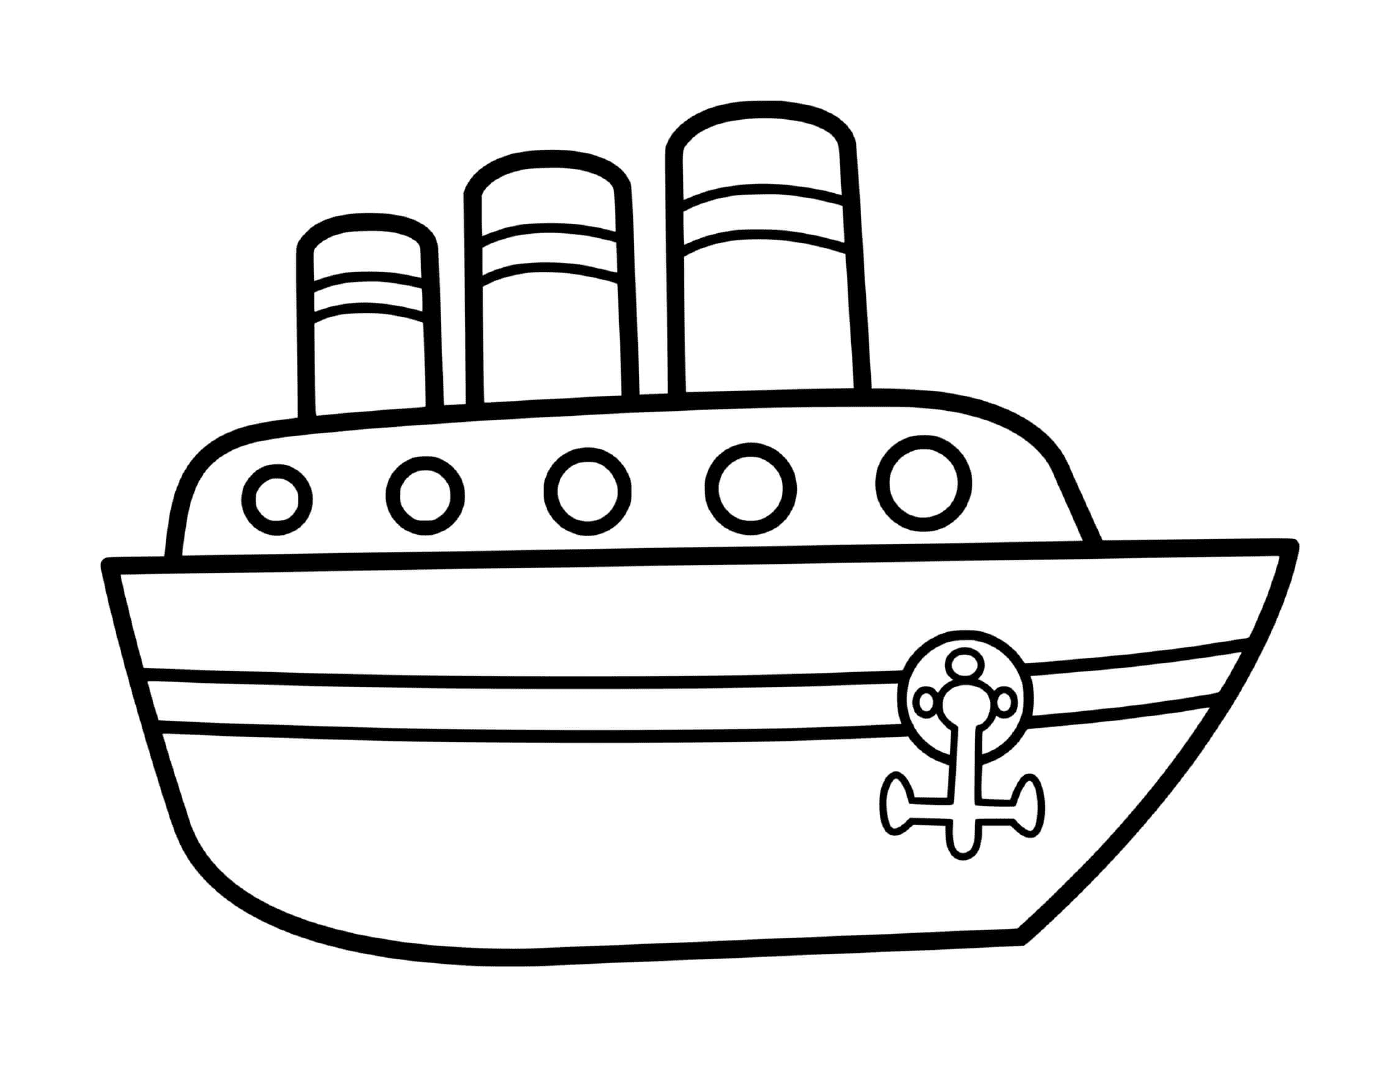  Un barco 